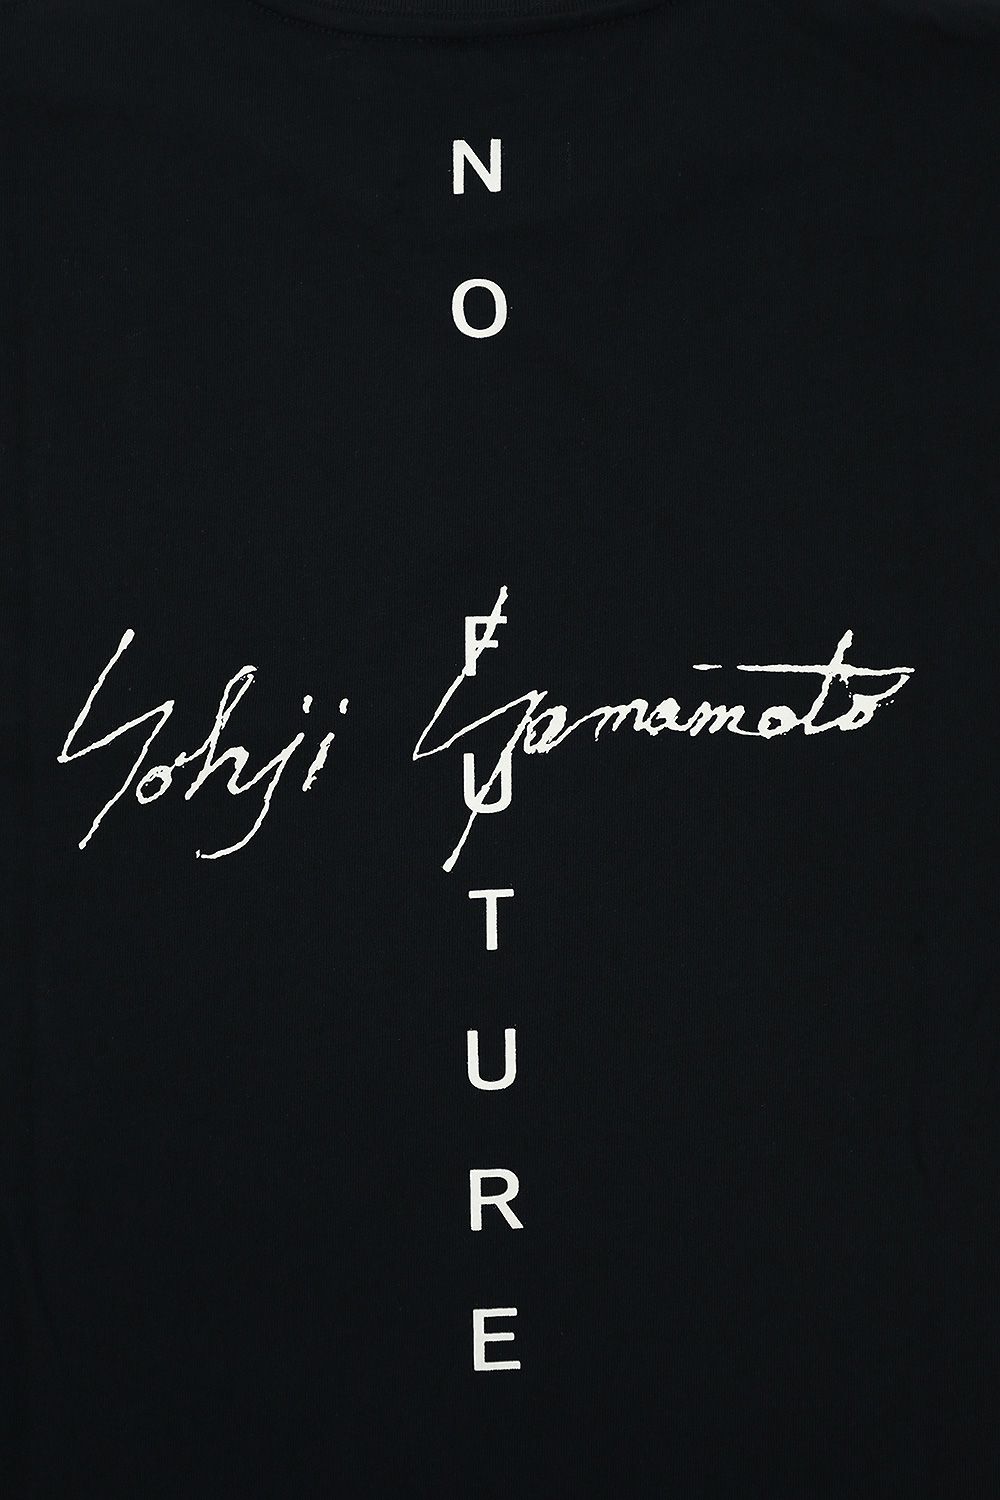 Yohji Yamamoto's No Future lament